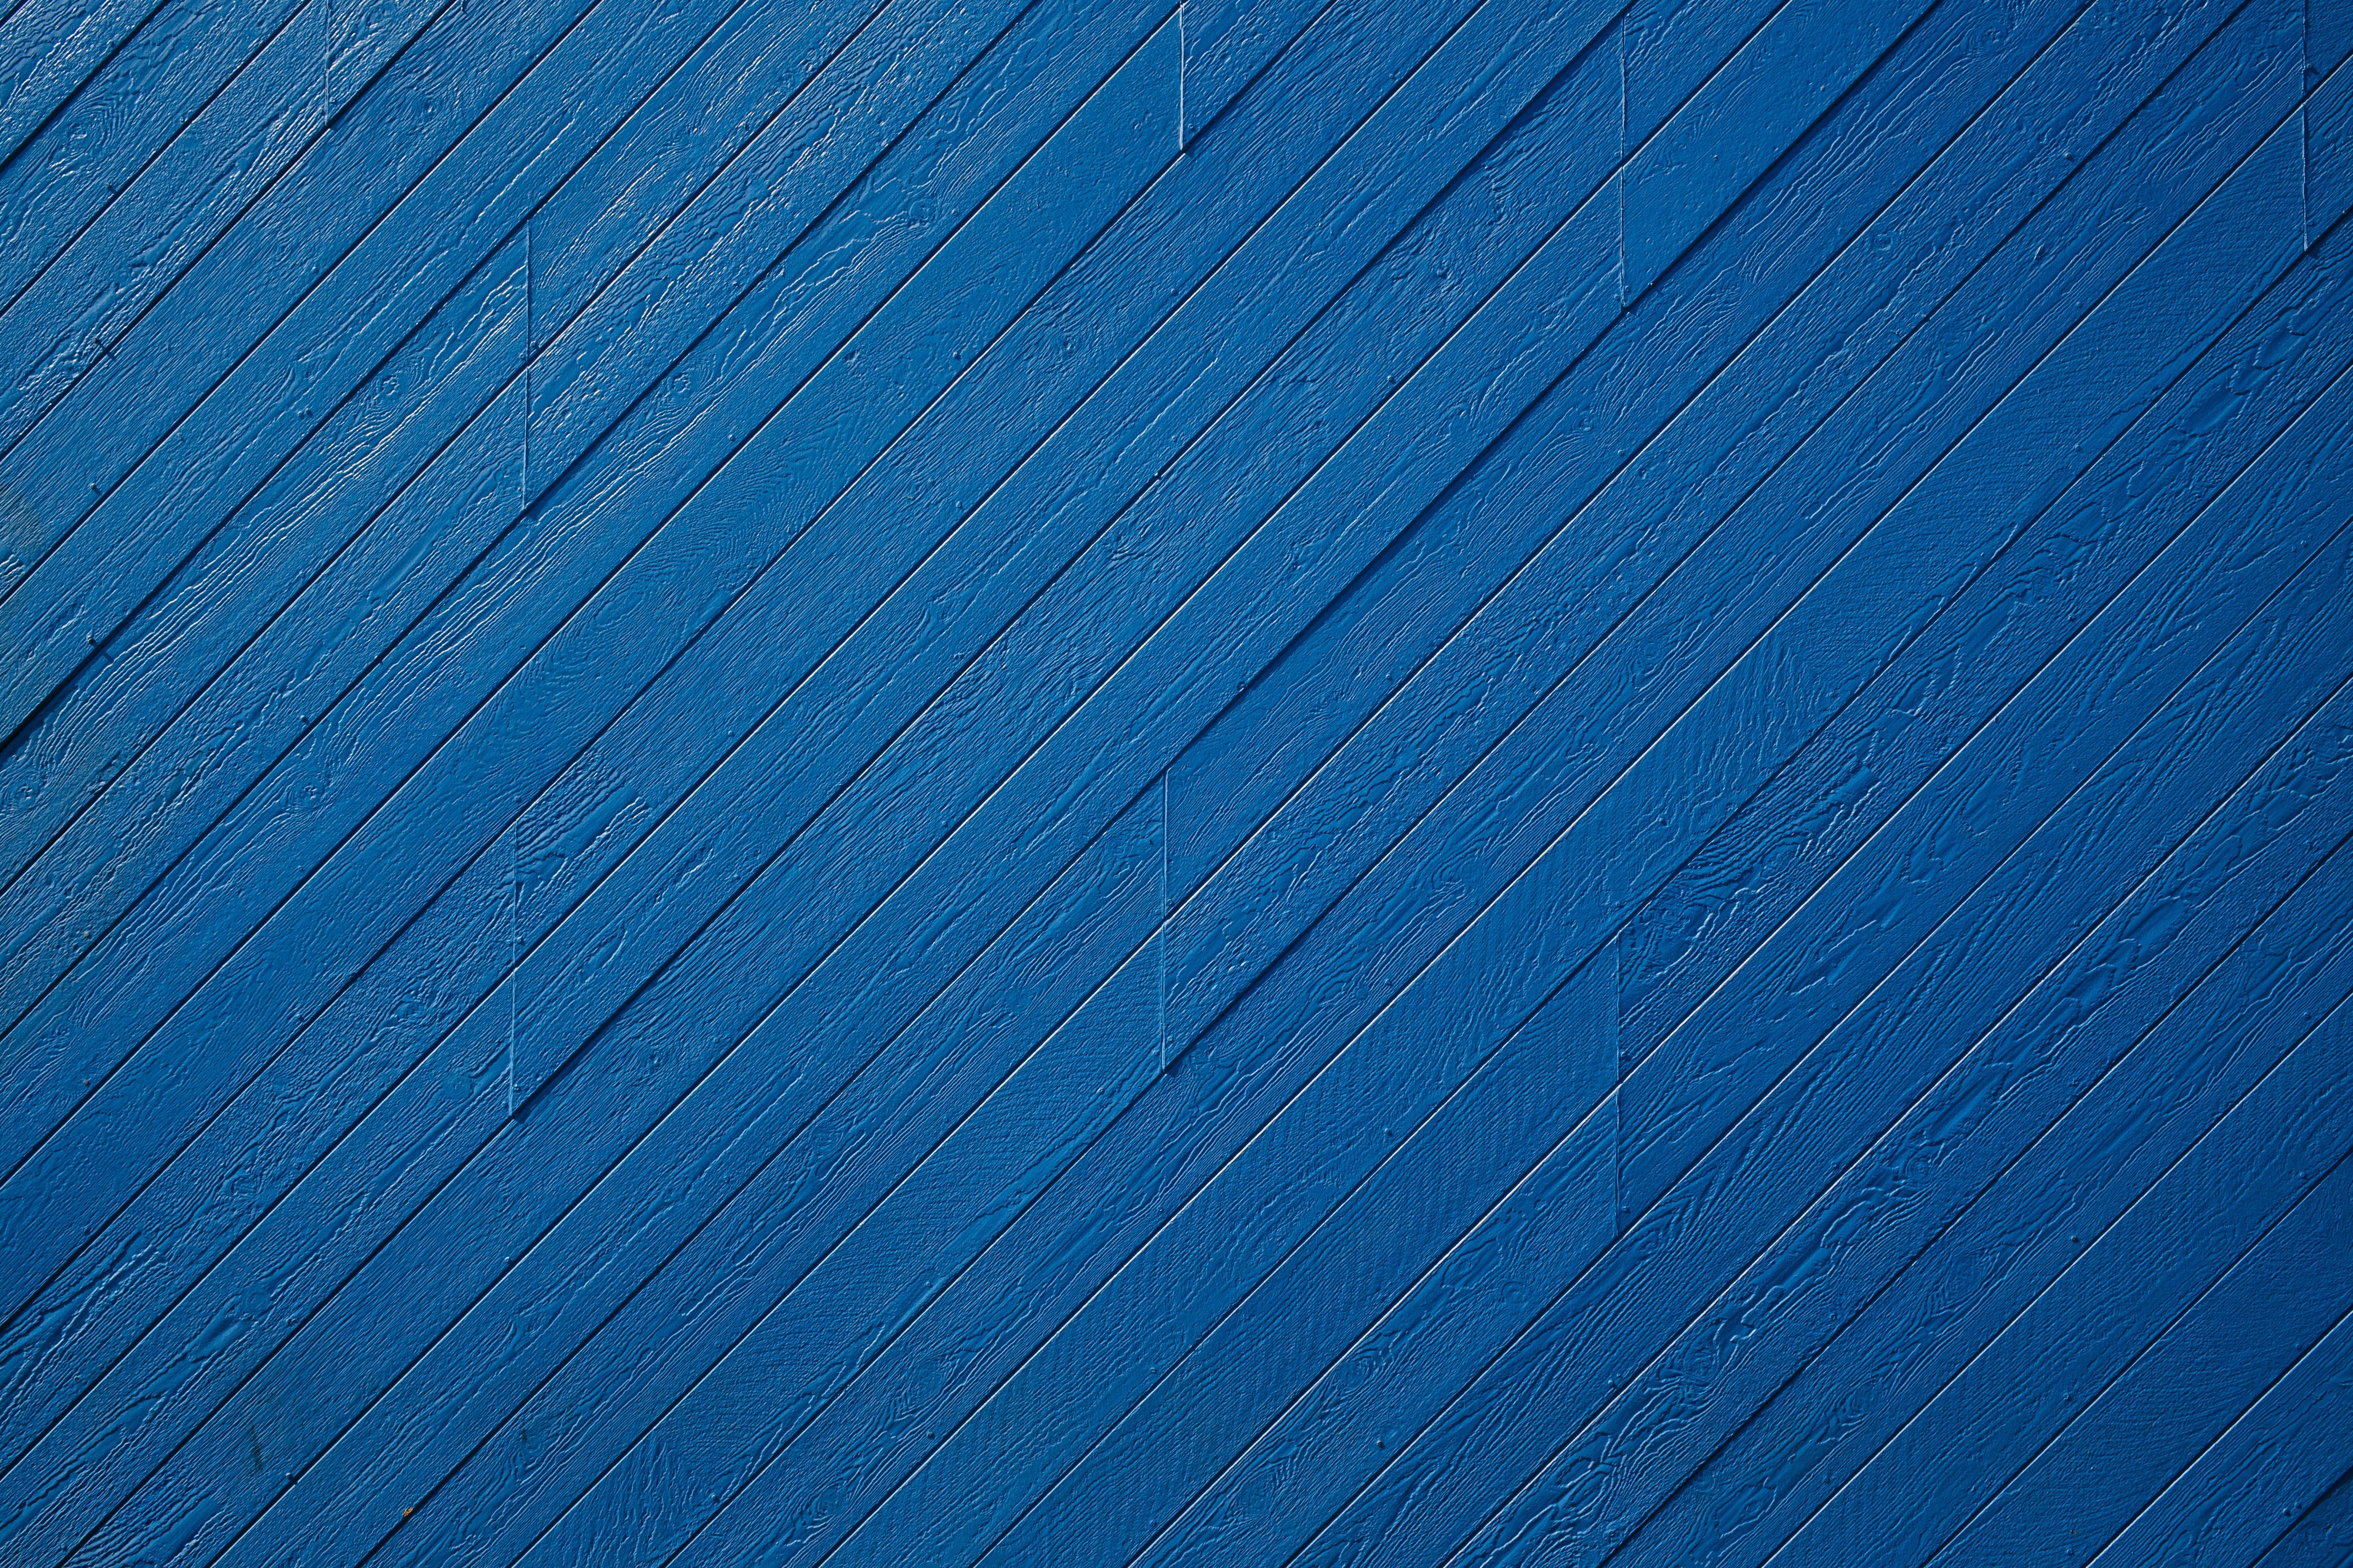 textures, obliquely, blue, wood, wooden, texture, paint, wall FHD, 4K, UHD